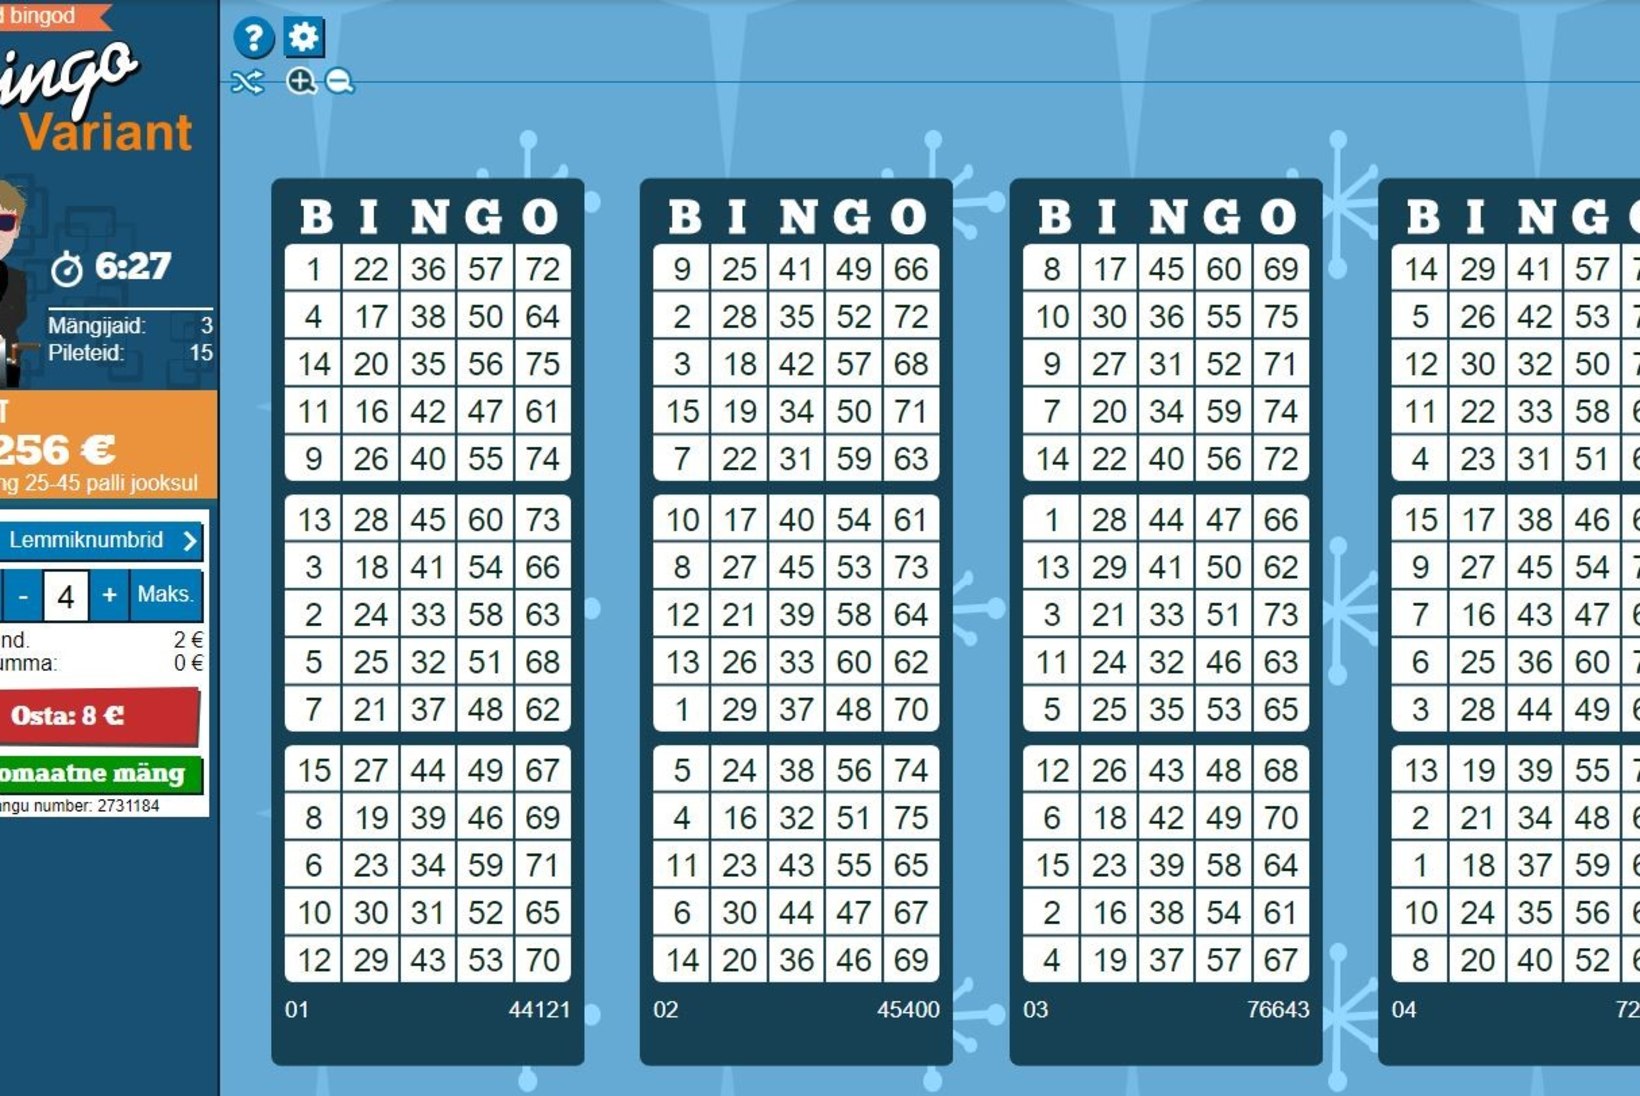 Bingoga võideti rekordsumma – 150 000 eurot!